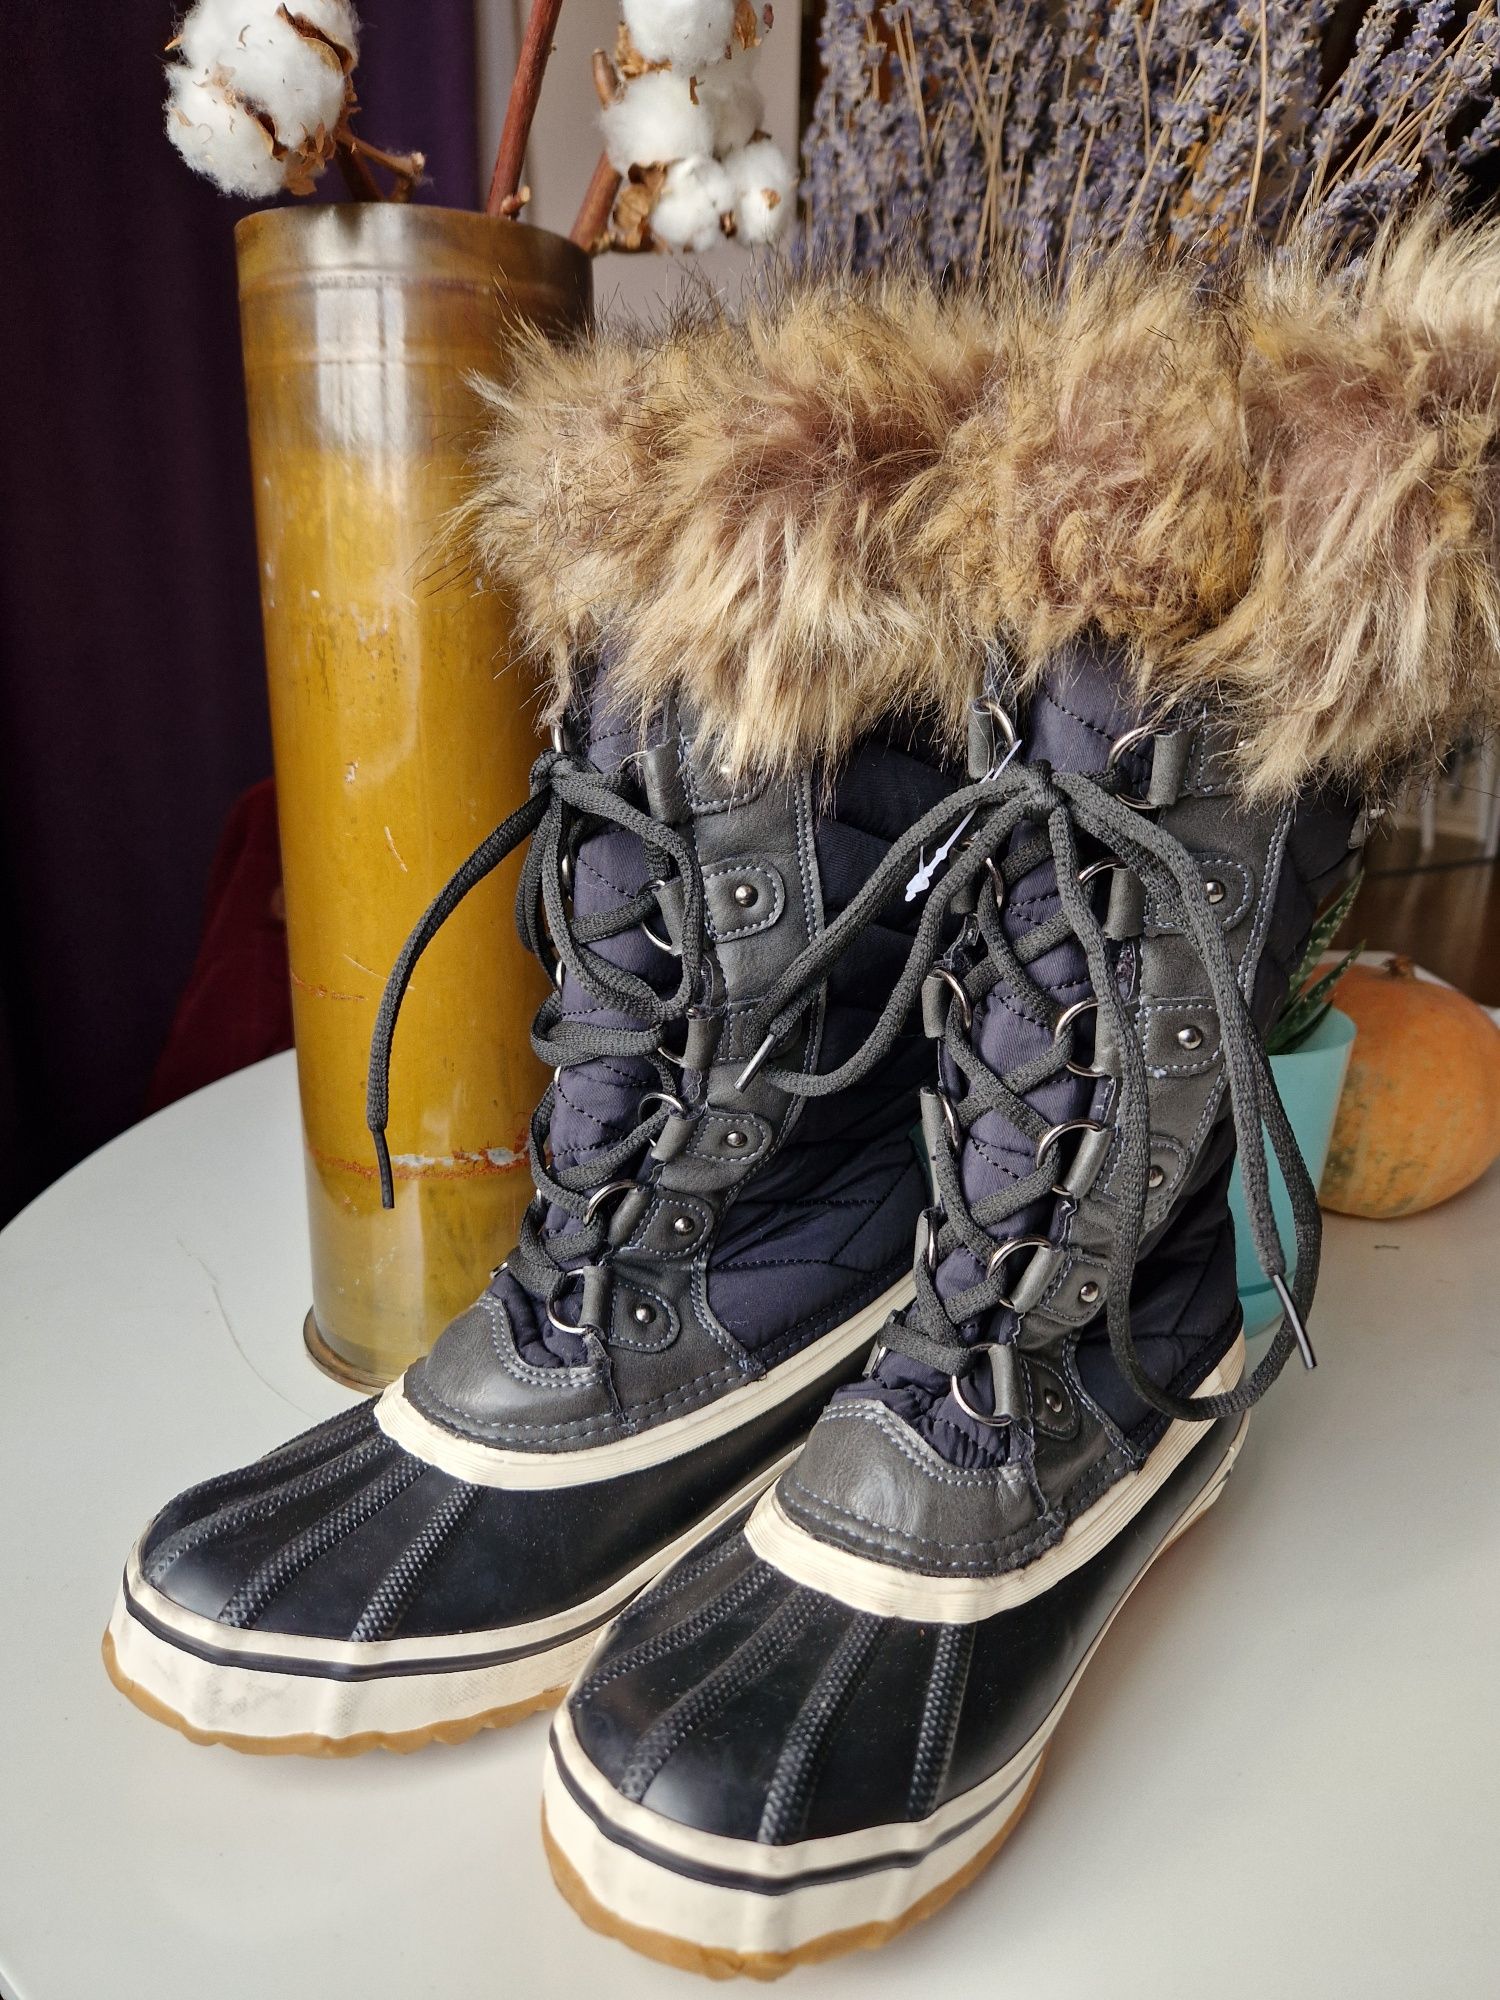 МЕГА РОЗПРОДАЖ зимове взуття, чоботи сапожки